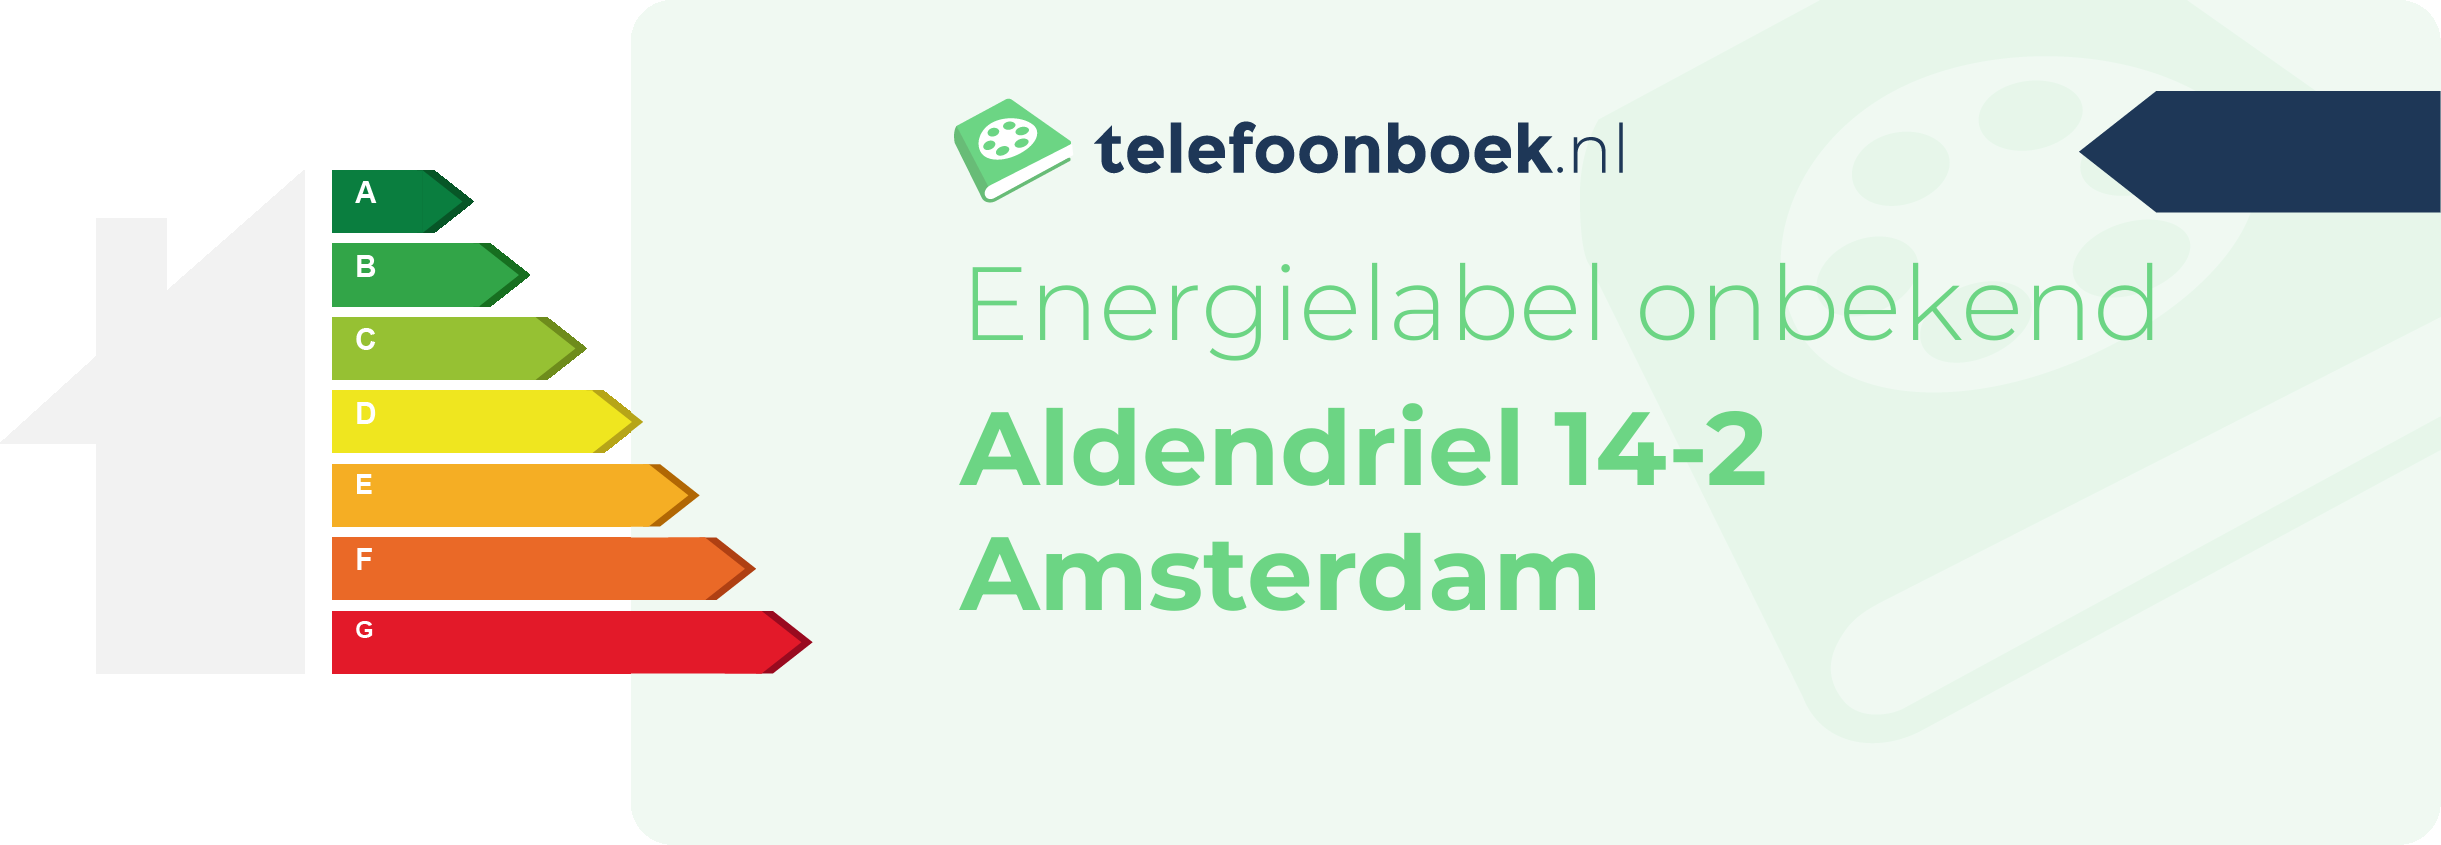 Energielabel Aldendriel 14-2 Amsterdam